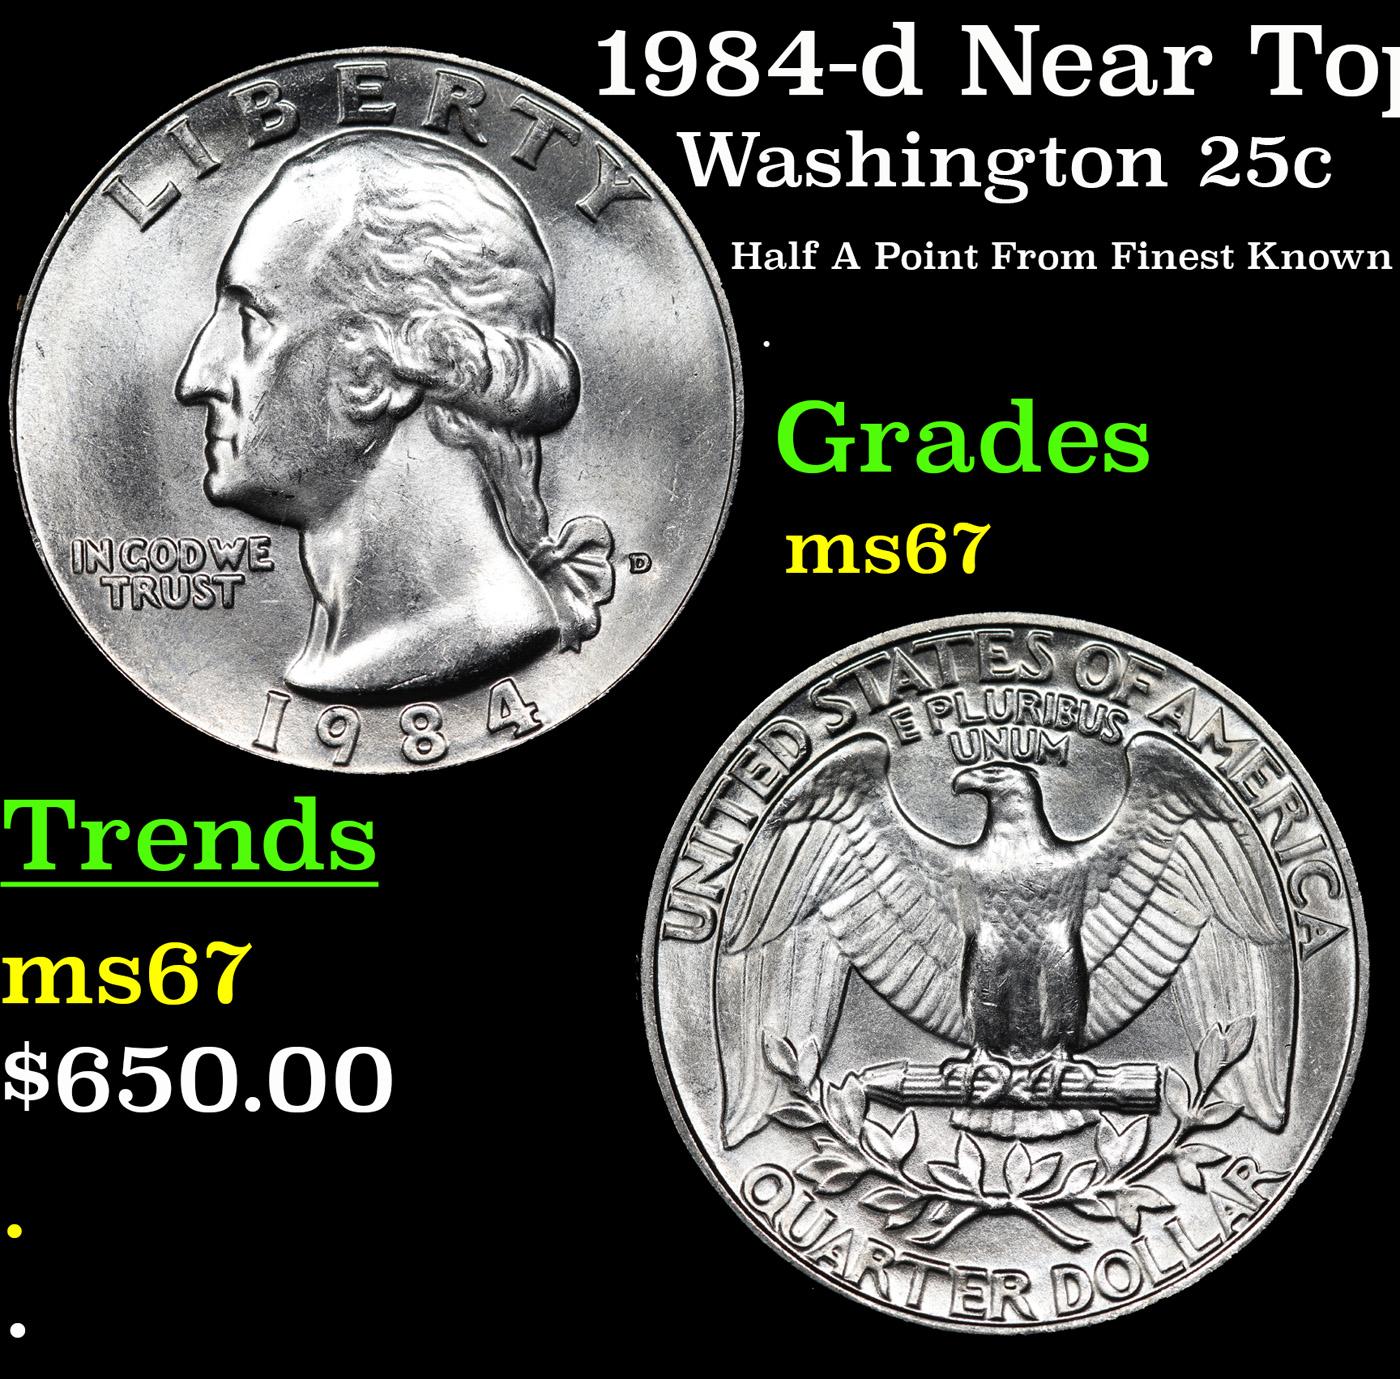 1984-d Washington Quarter Near Top Pop! 25c Graded ms67 BY SEGS